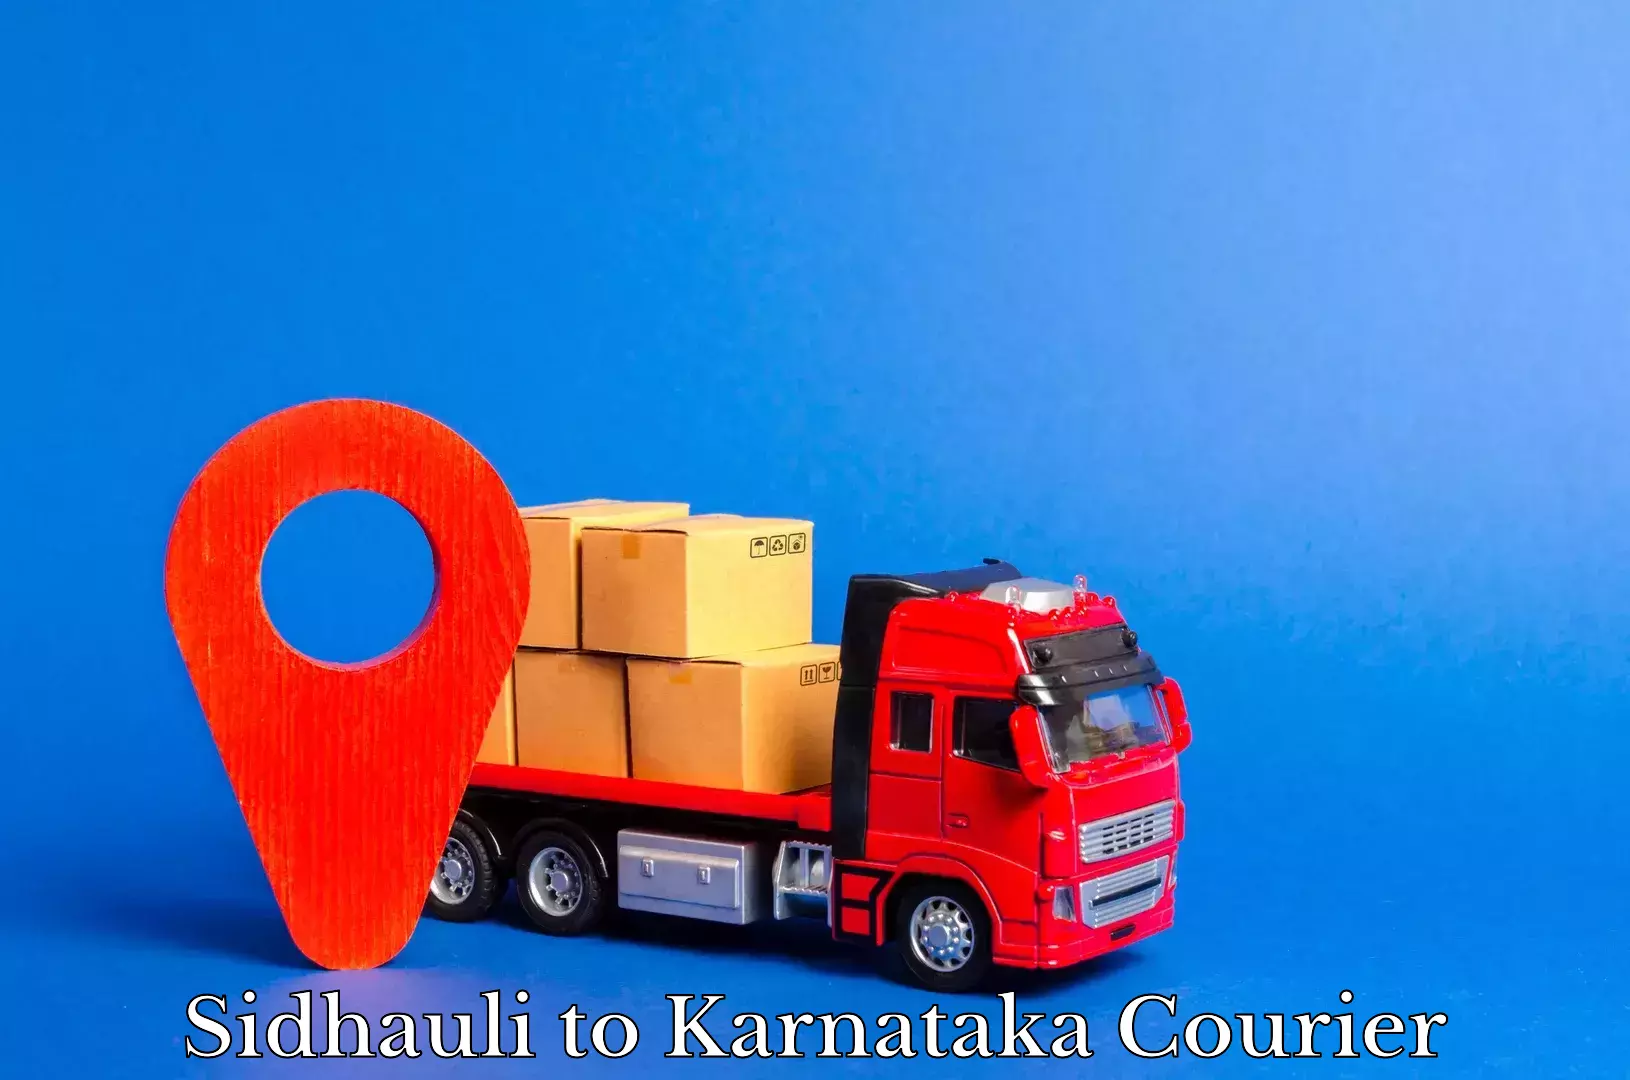 State-of-the-art courier technology Sidhauli to Karnataka